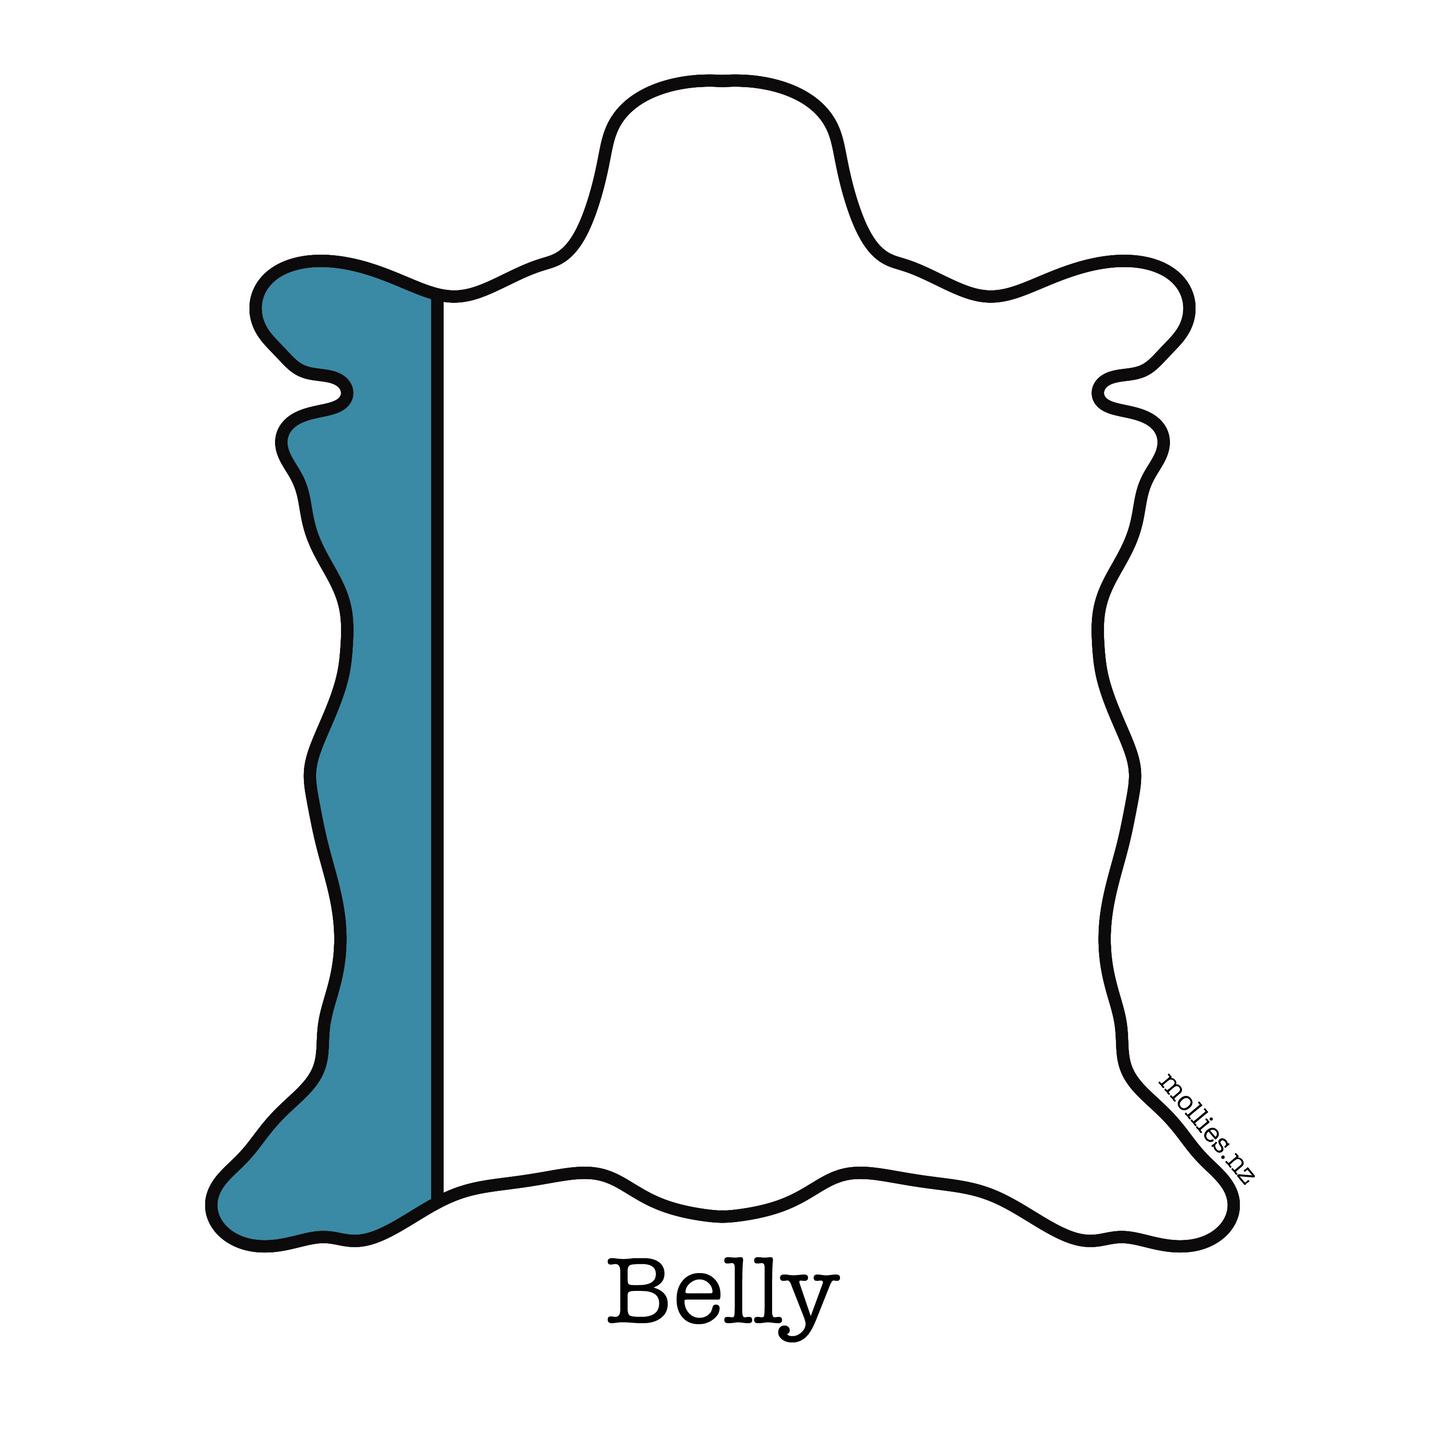 LEATHER Veg Tanned Tirano Italian / Belly